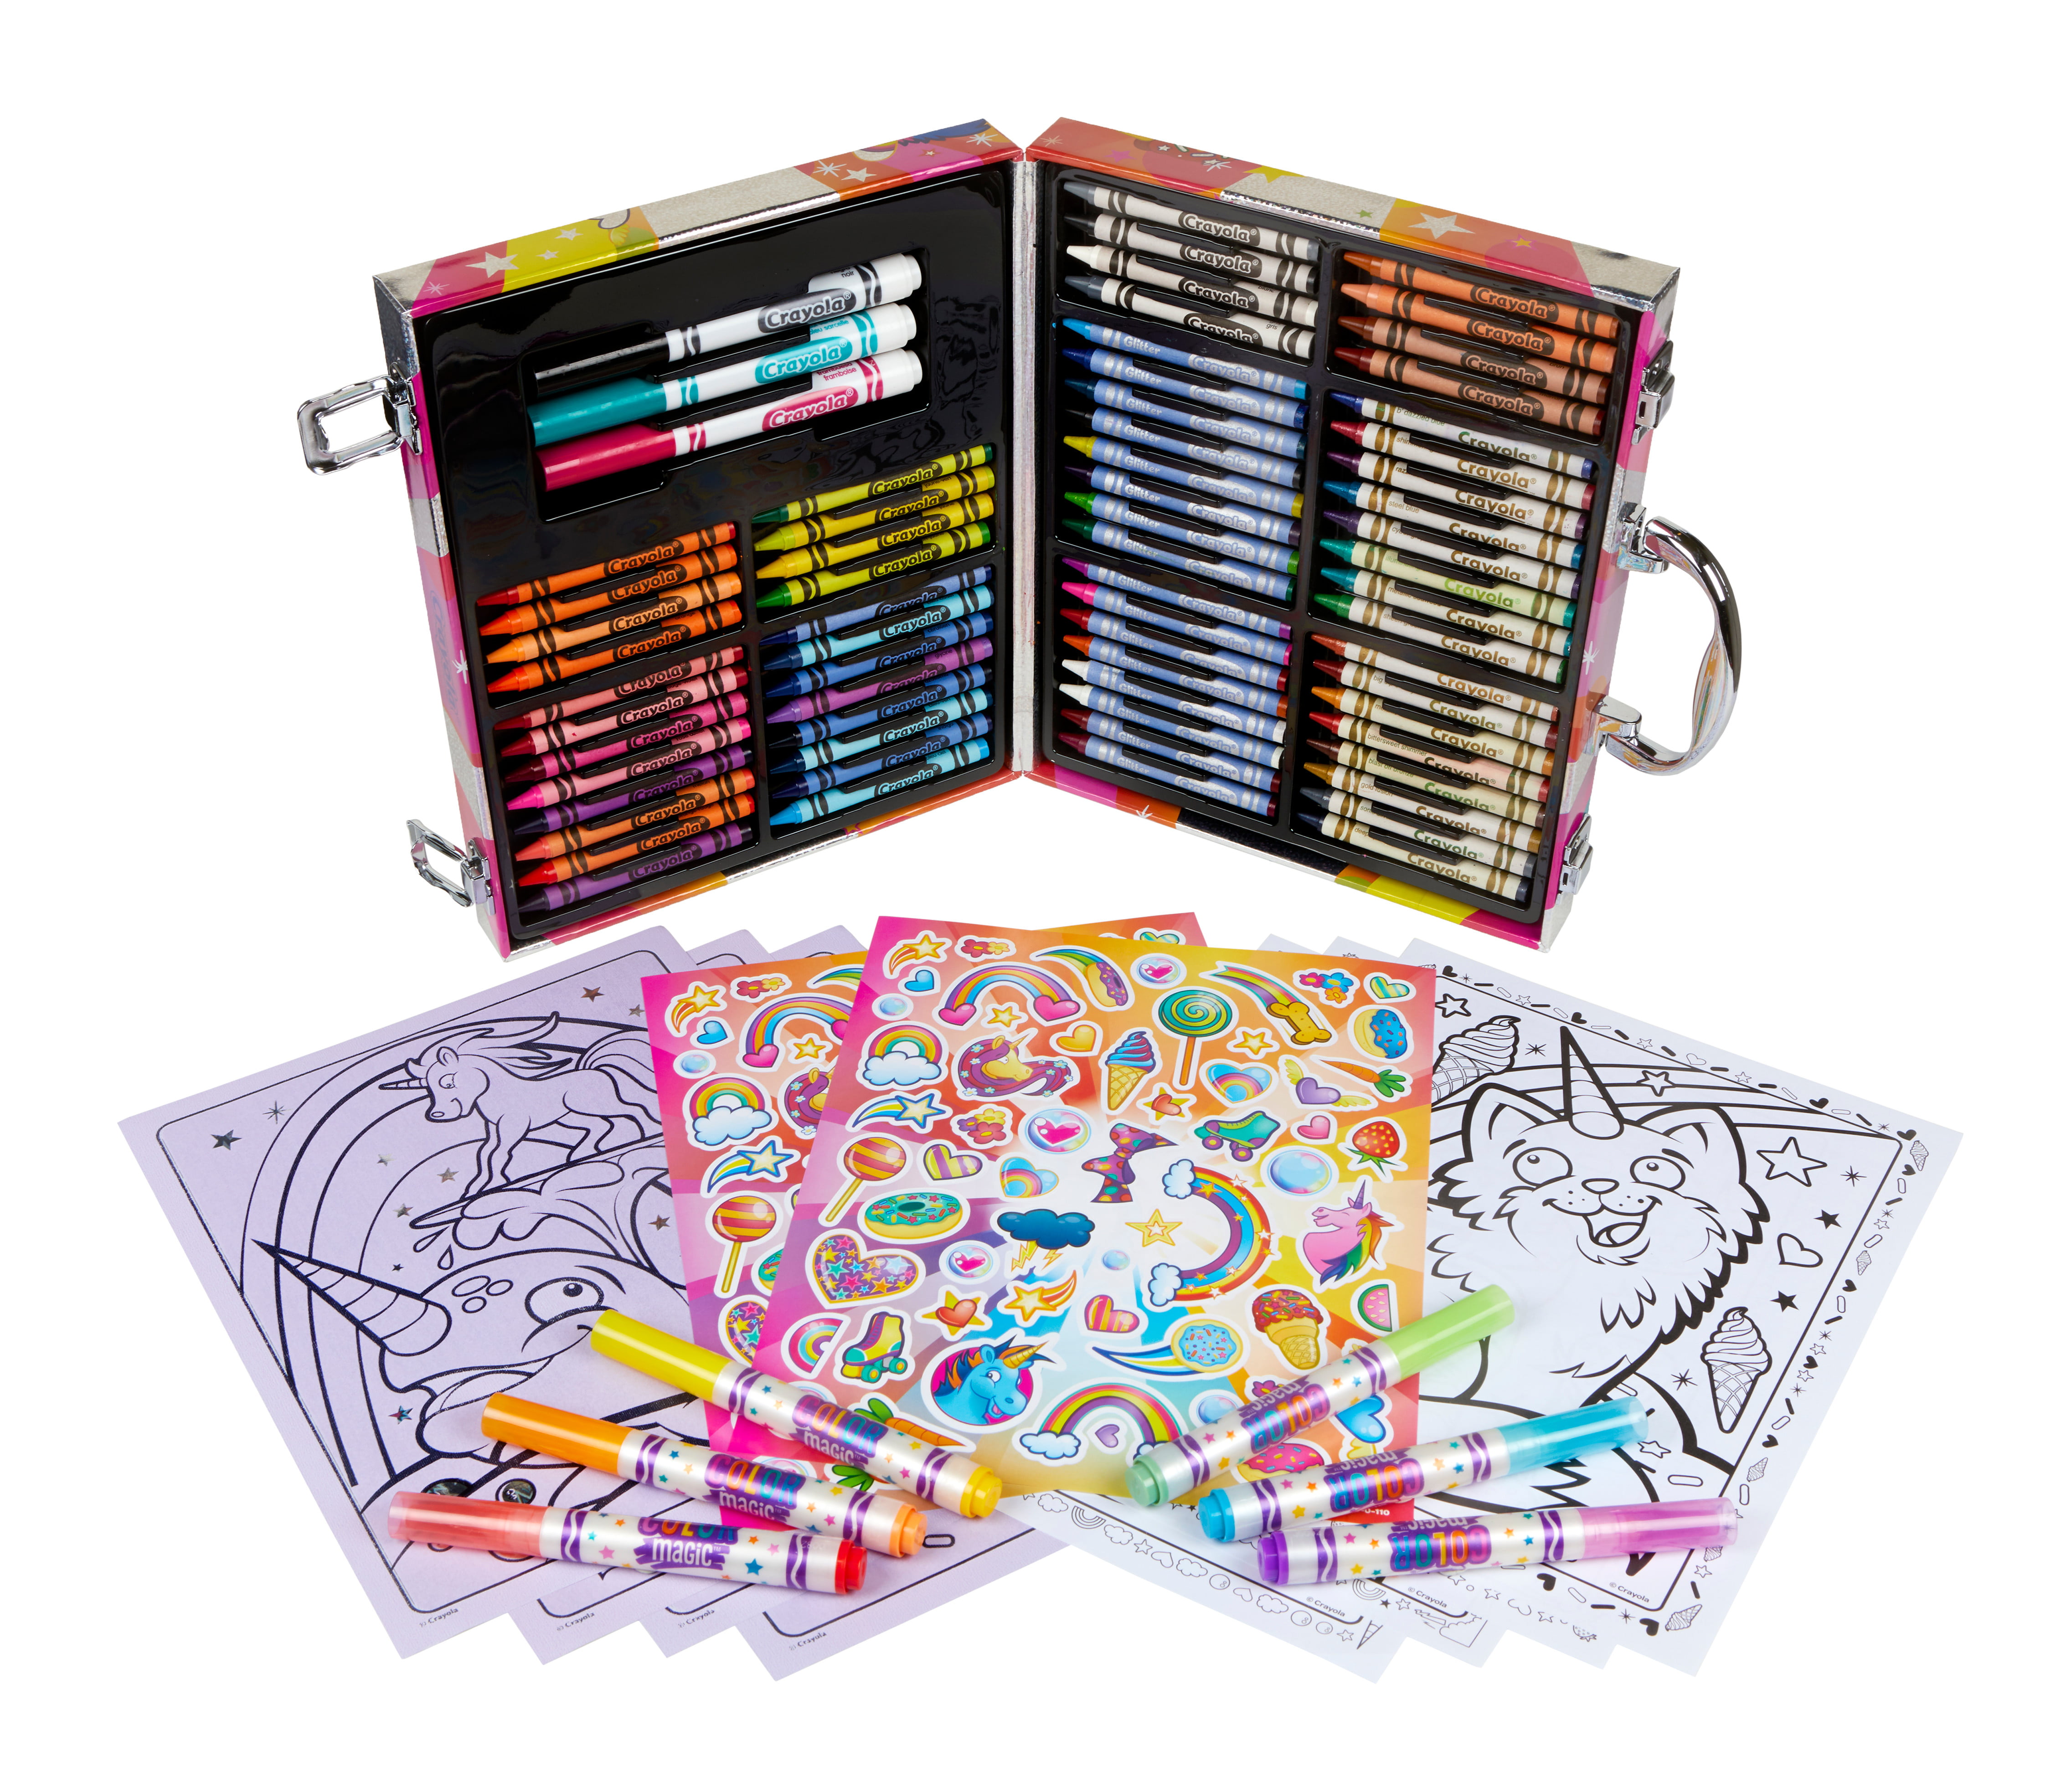 Crayola Mini Art Set with UniCreatures, Kids Art Kit, 100+ Pieces, Ages 3,  4, 5, 6, 7